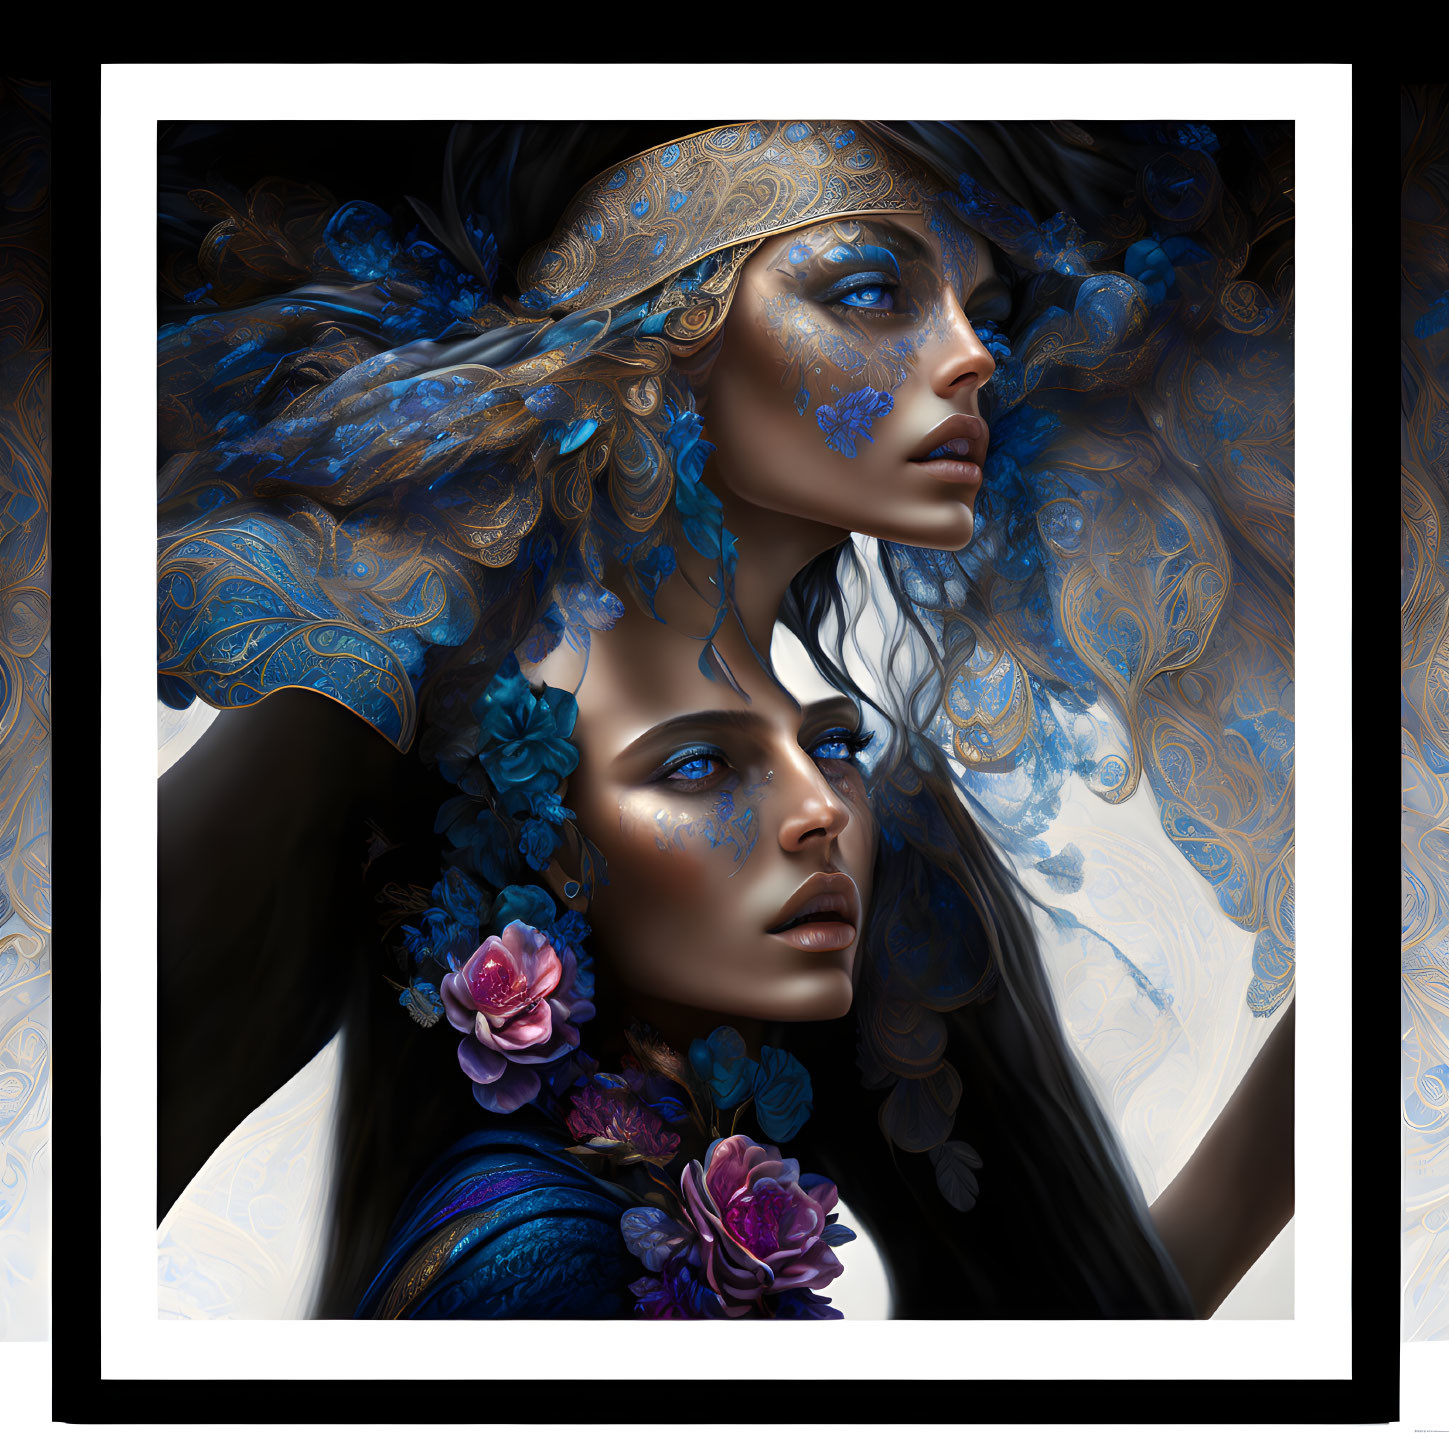 Two Women Illustration: Blue and Gold Ornate Headdresses